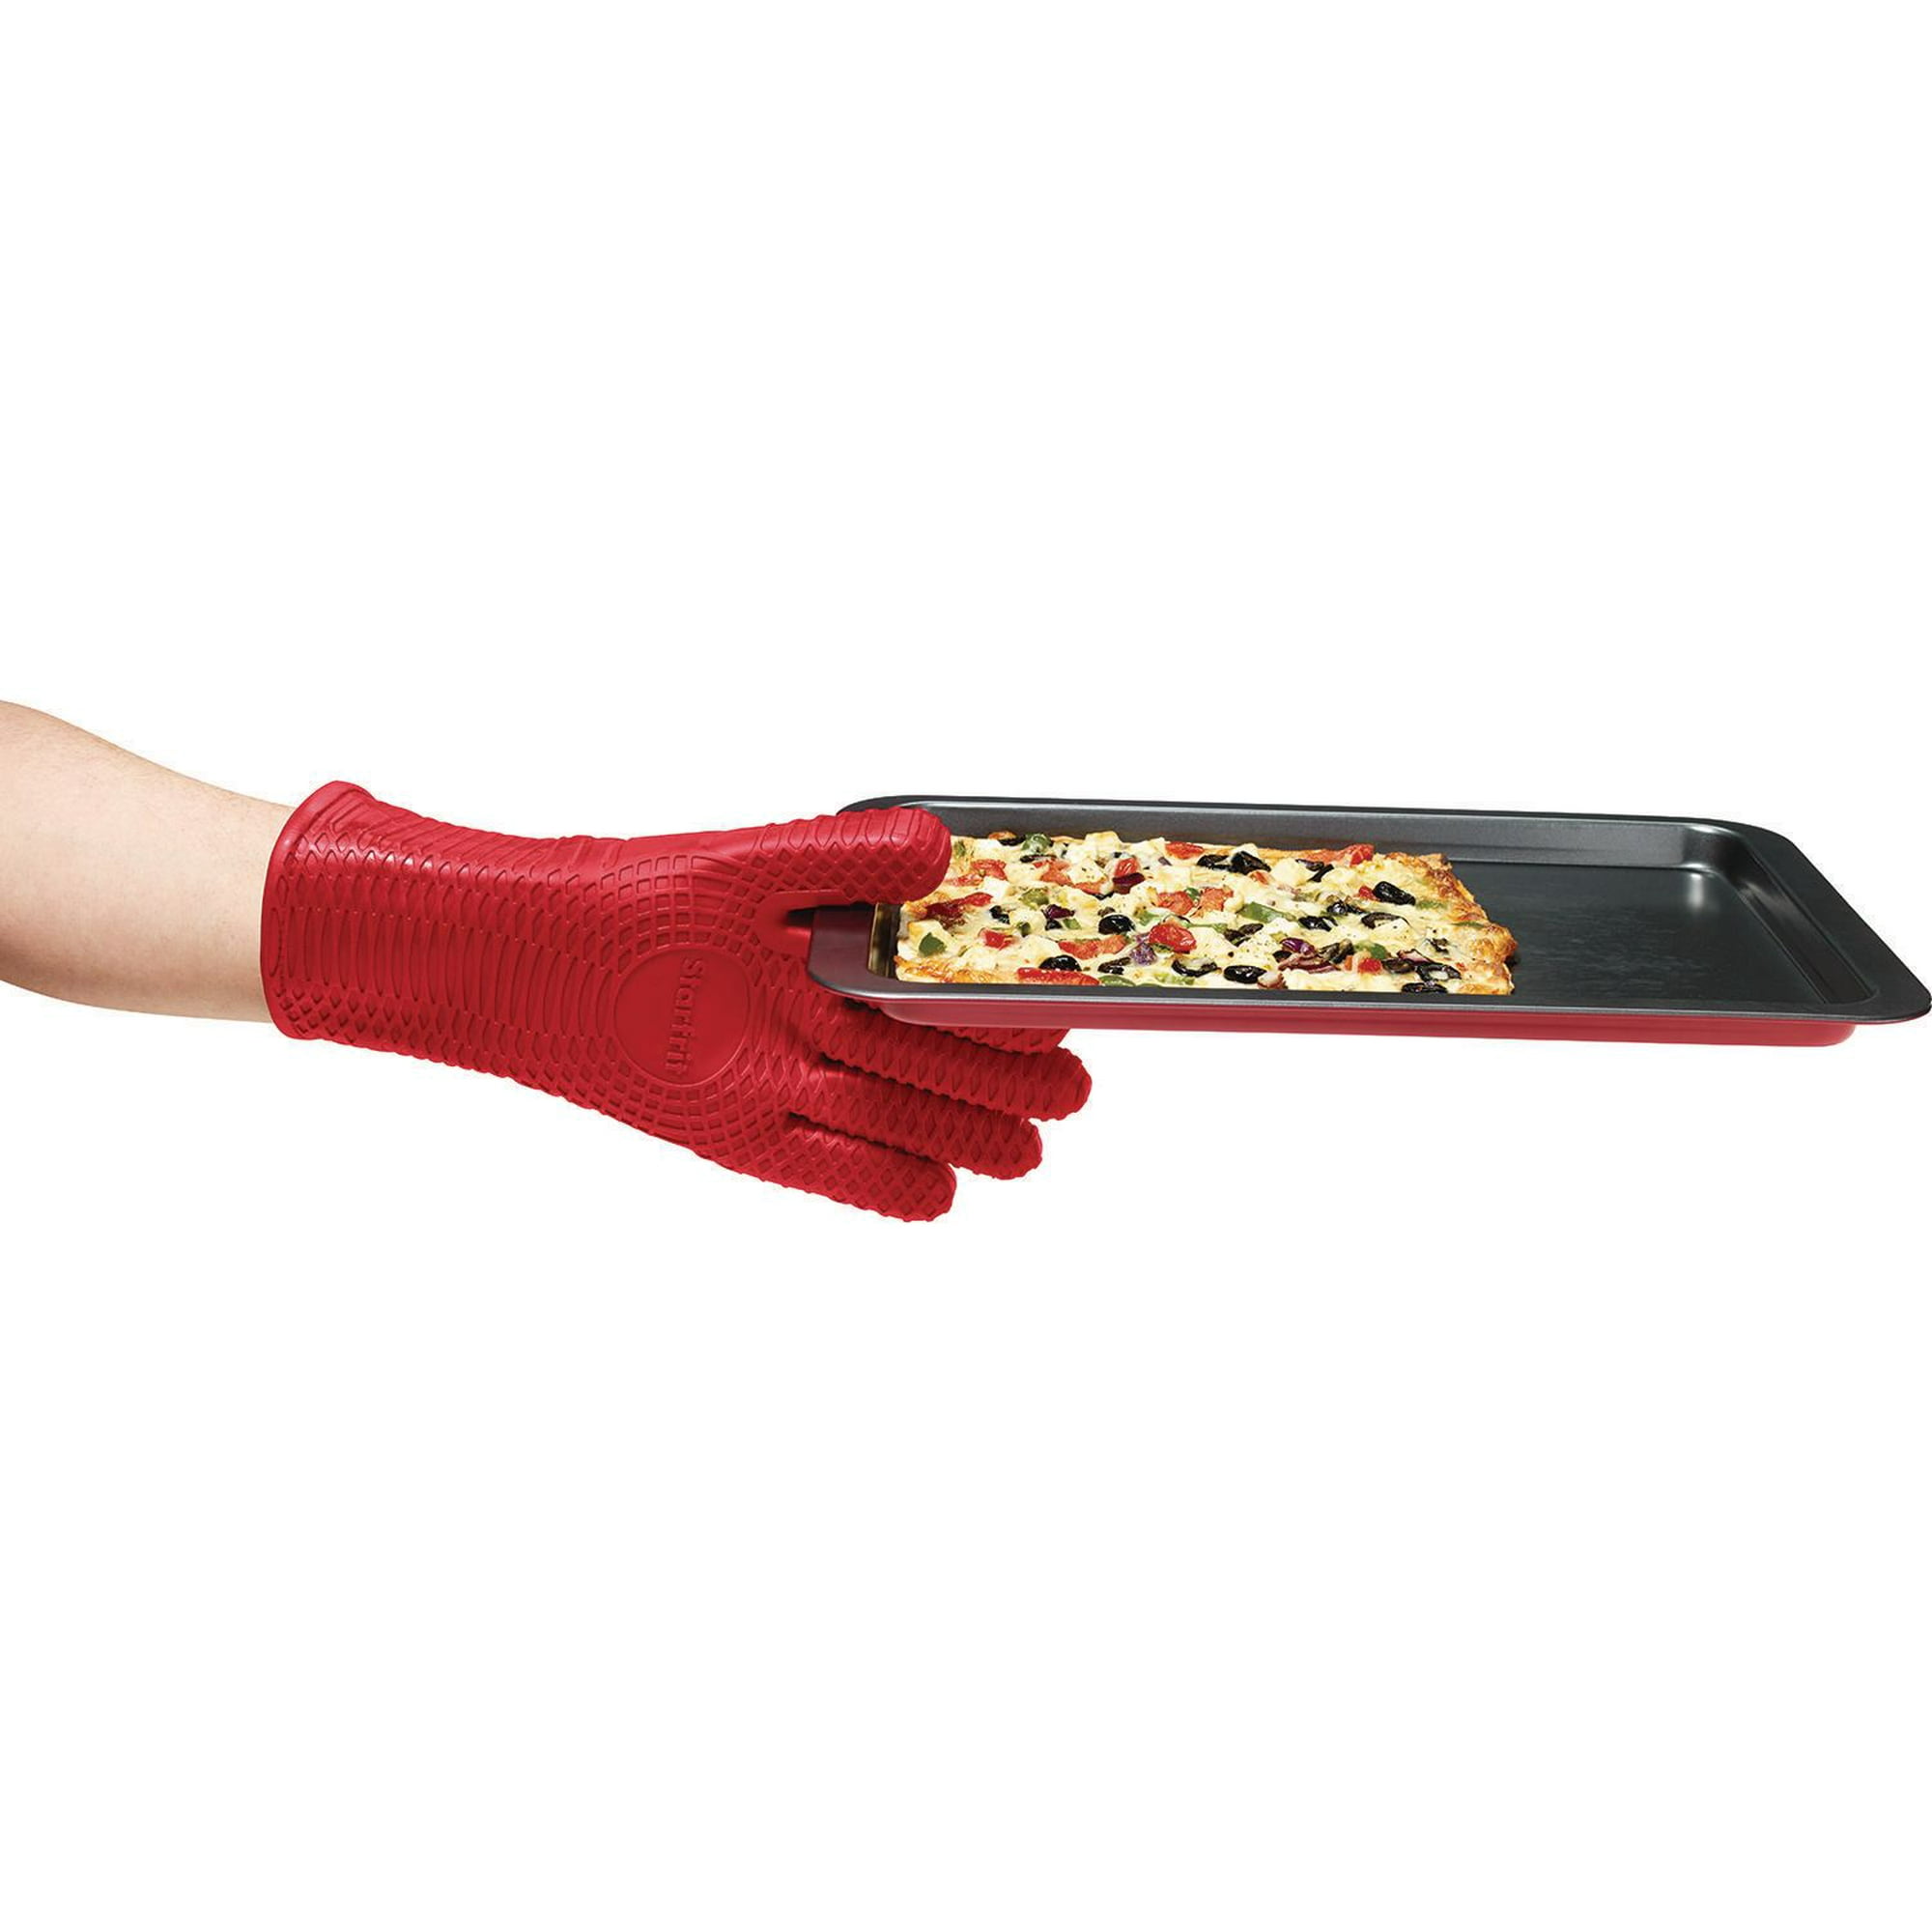 Starfrit Silicone Oven Glove, Five finger glove